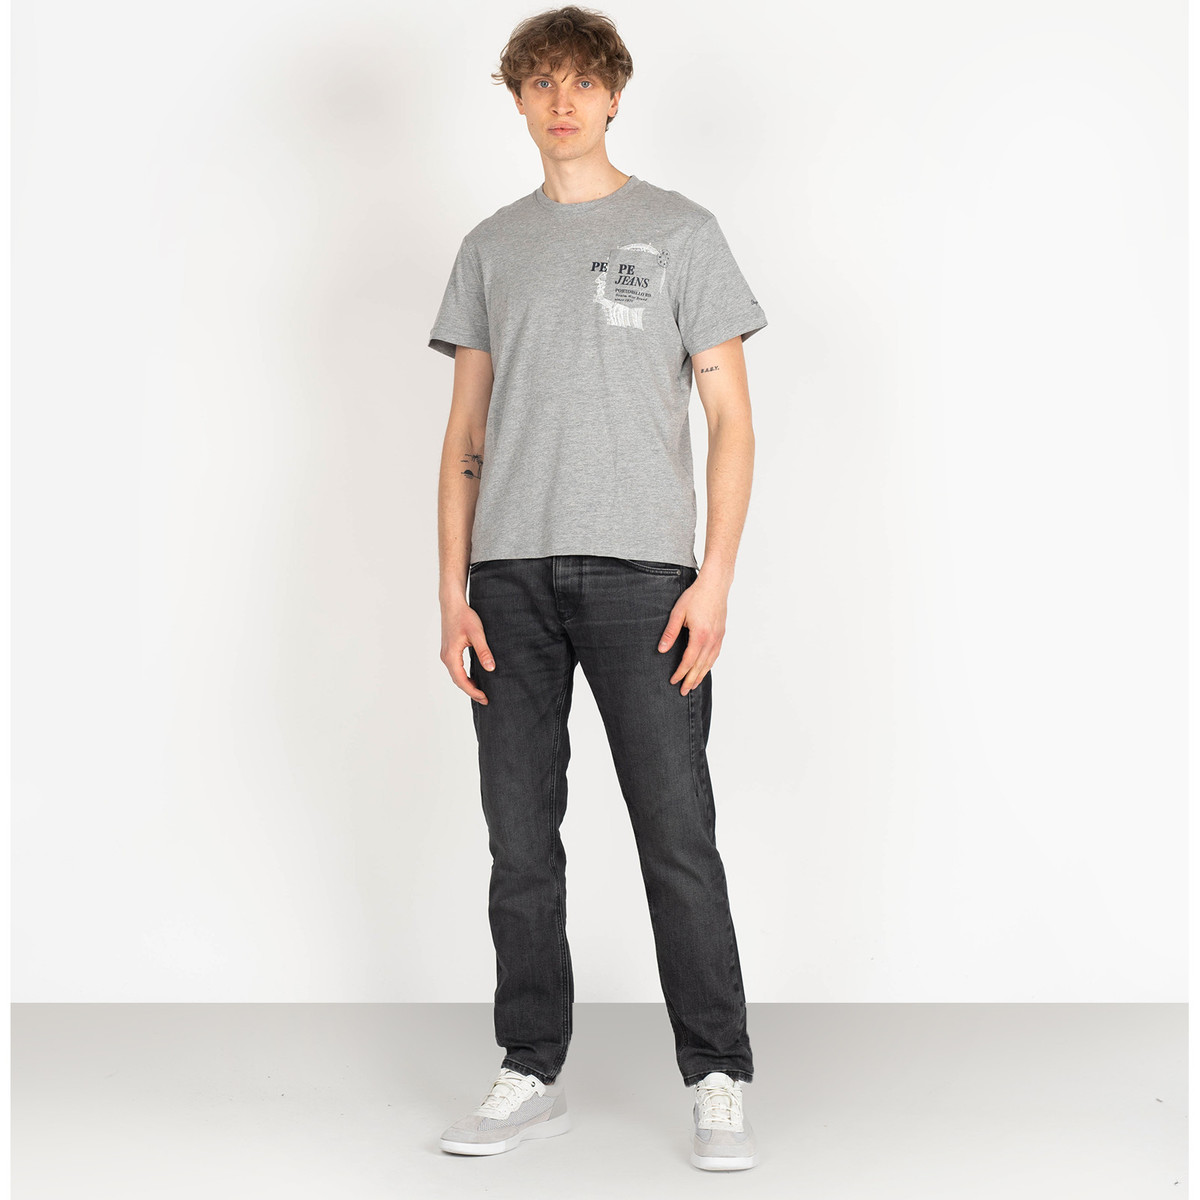 Lyhythihainen t-paita Pepe jeans PM508023 | Sergio EU M